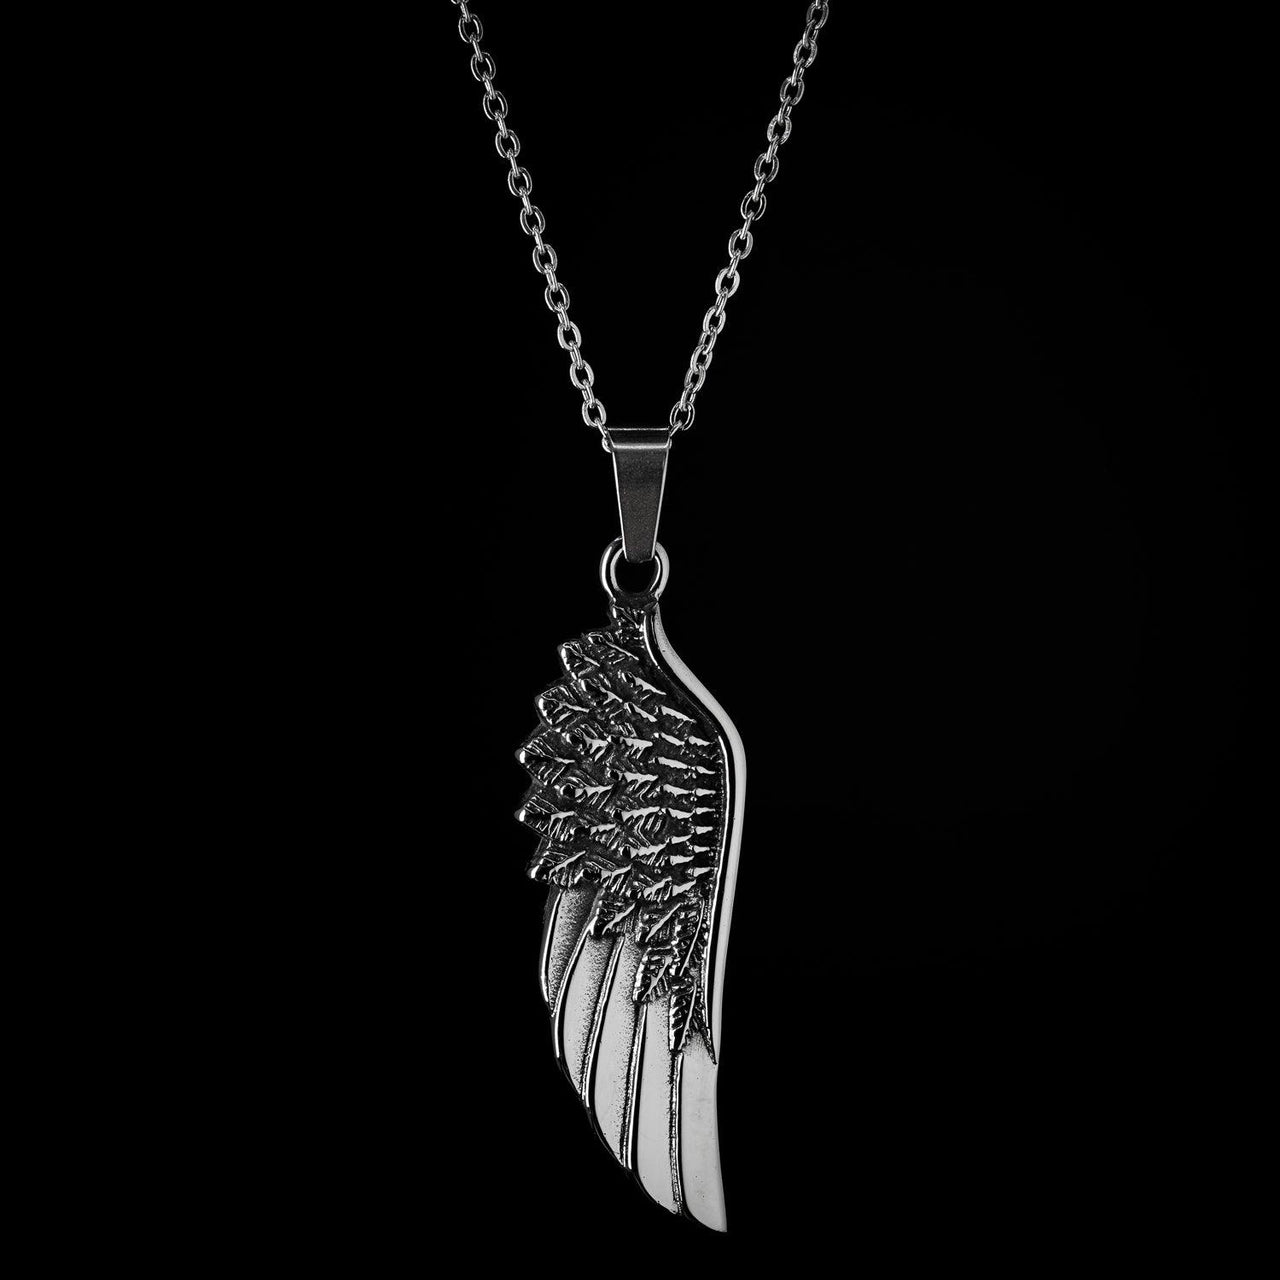 Raven Wing Pendant - Black Feather Design